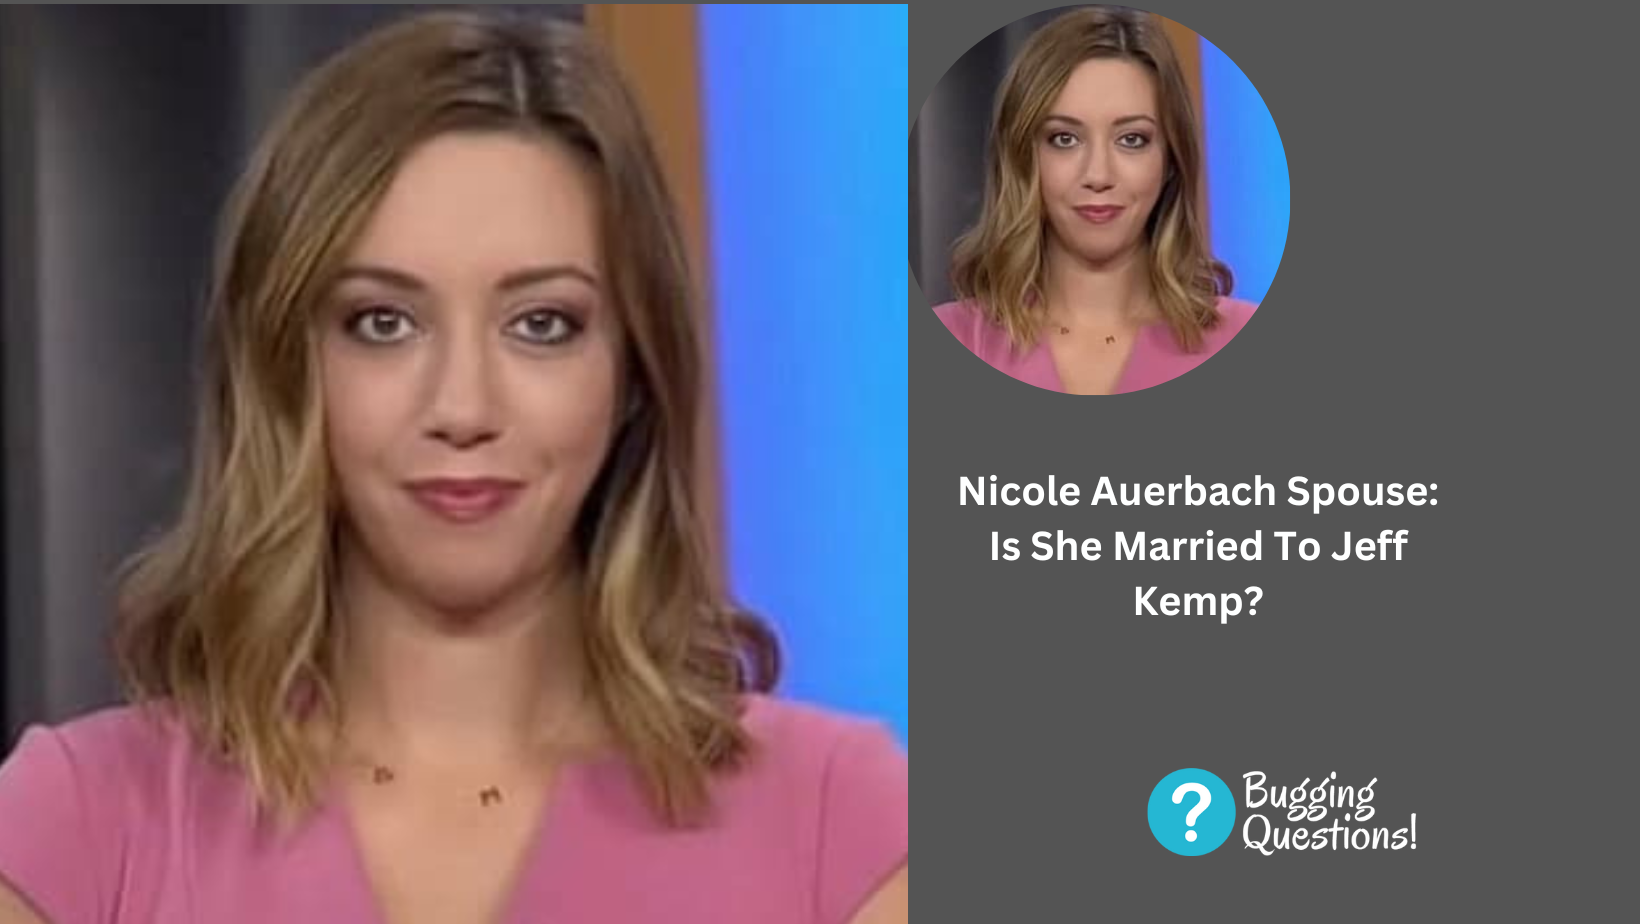 Nicole Auerbach Spouse: Is She Married To Jeff Kemp?